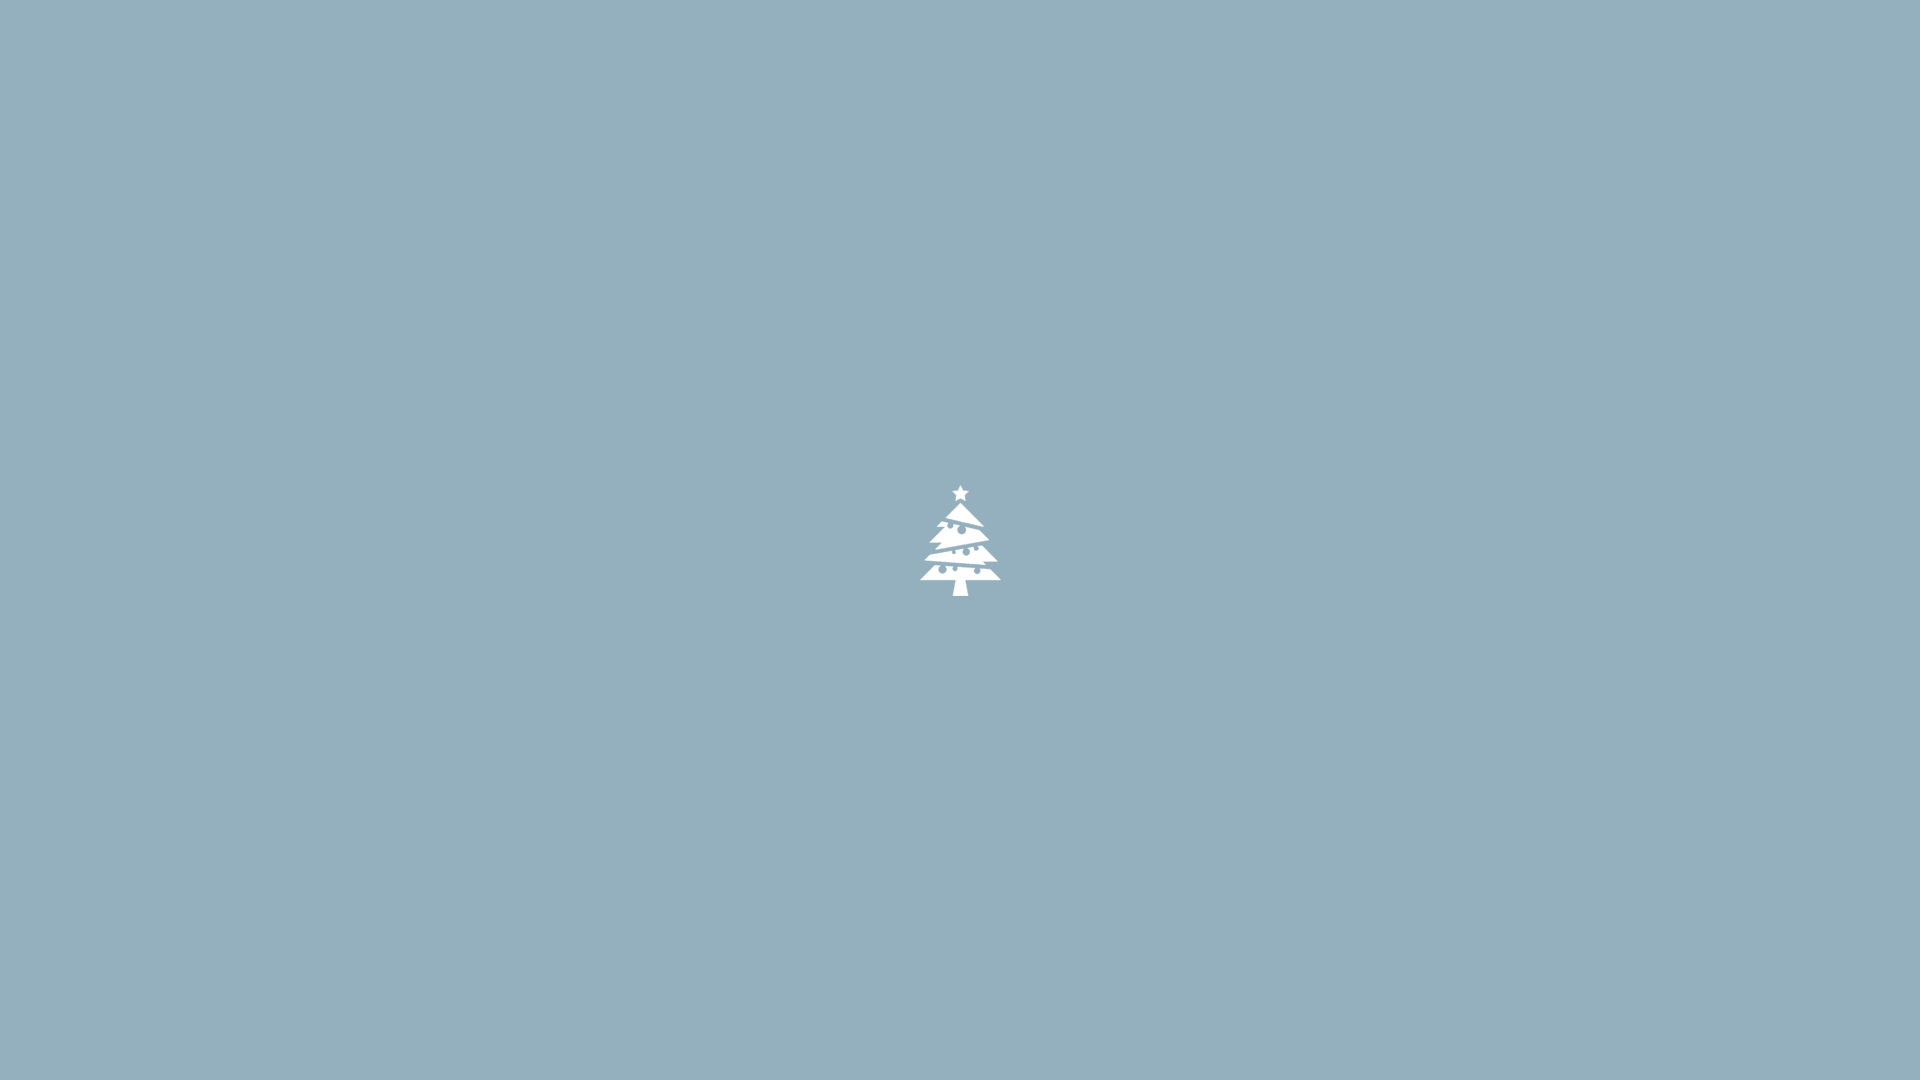 Minimalist Christmas Tree Wallpaper In